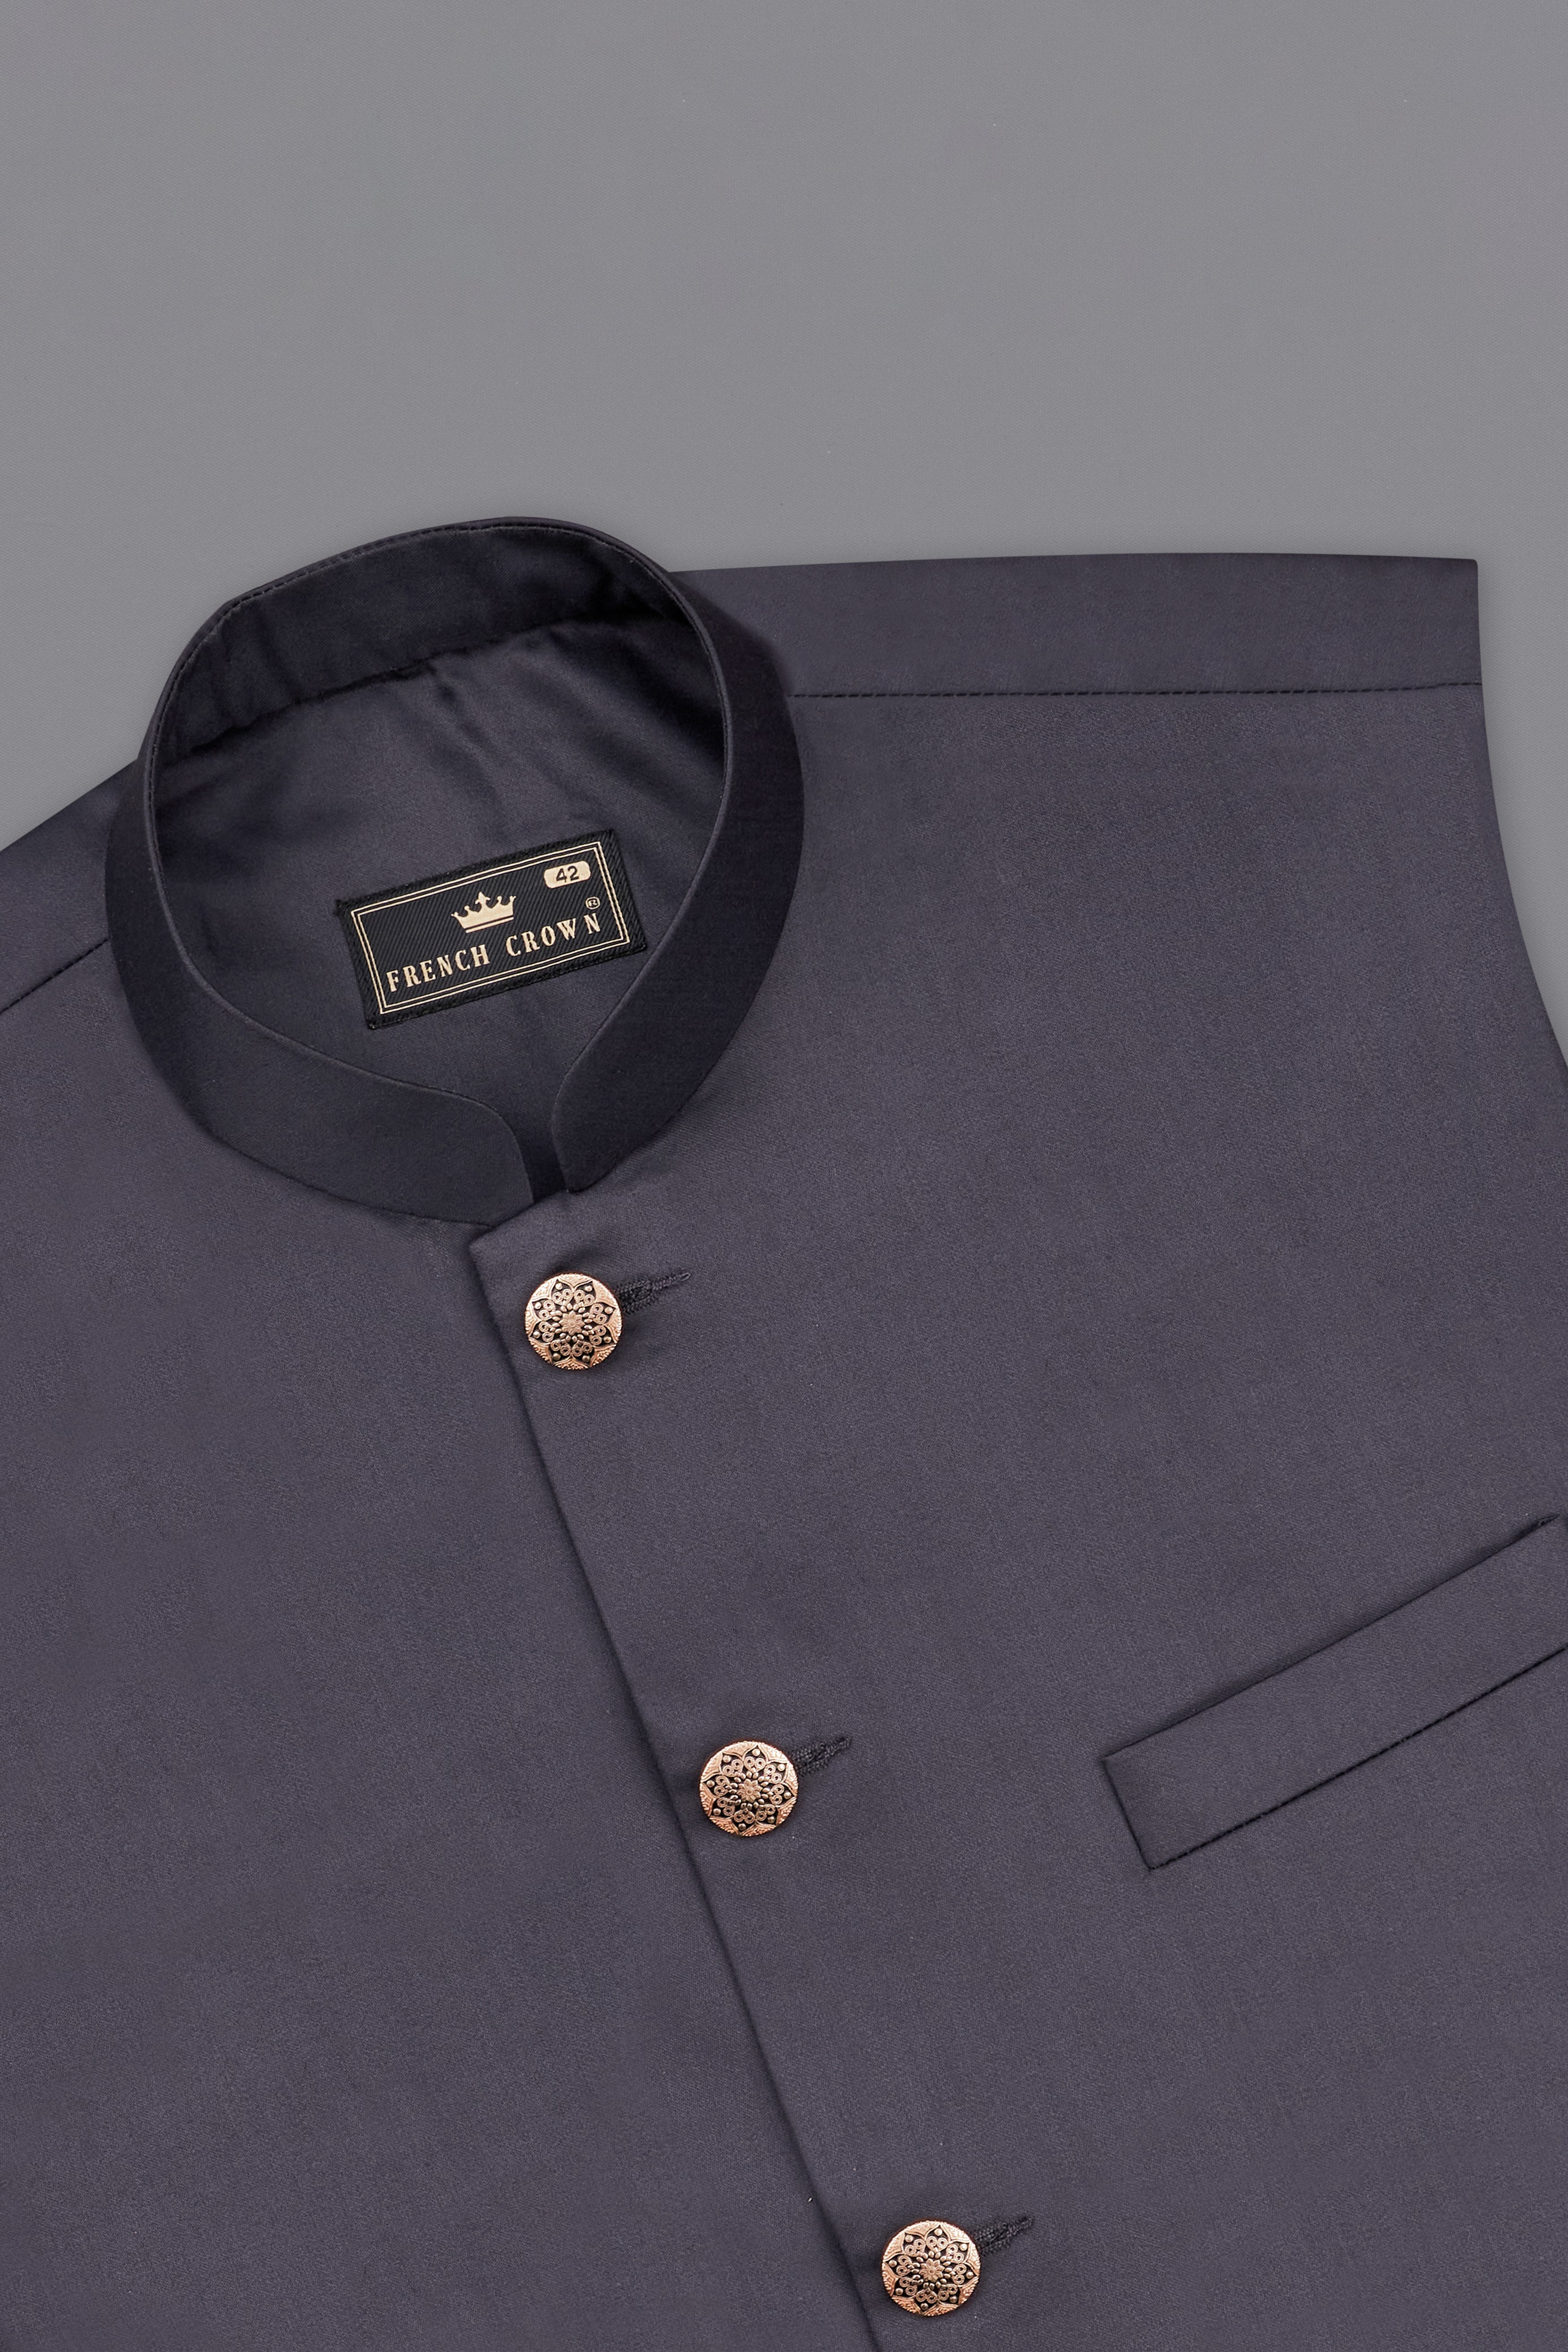 Mid Grey Subtle Sheen Cross Placket Wool Blend Bandhgala/Mandarin Suit